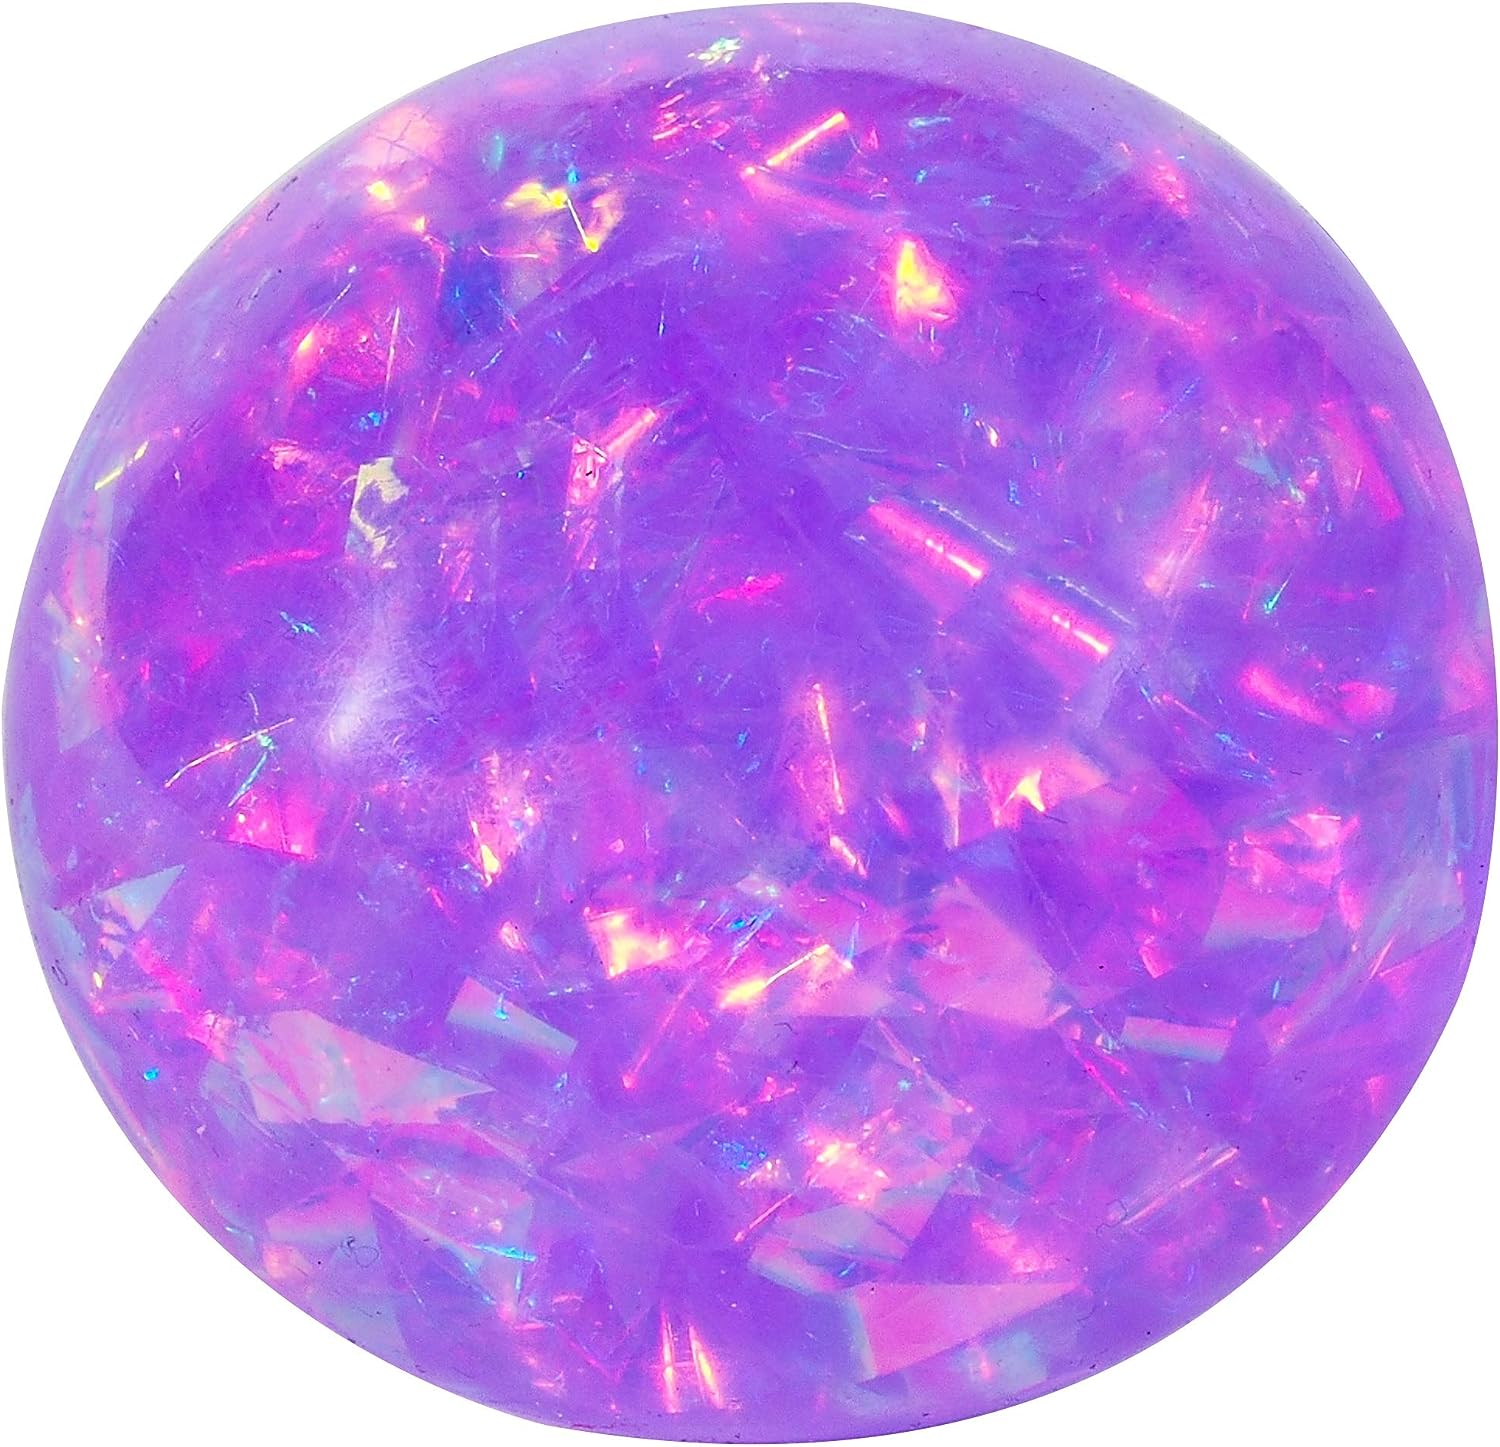 The purple Crystal Nee Doh.